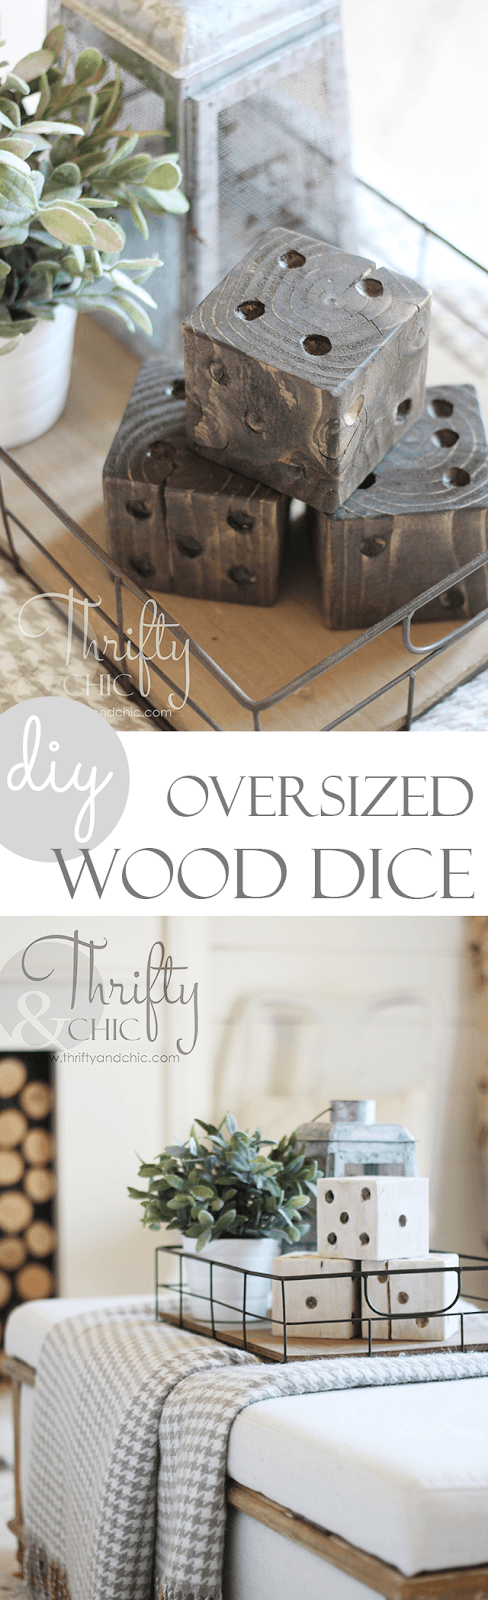 DIY oversized wood dice